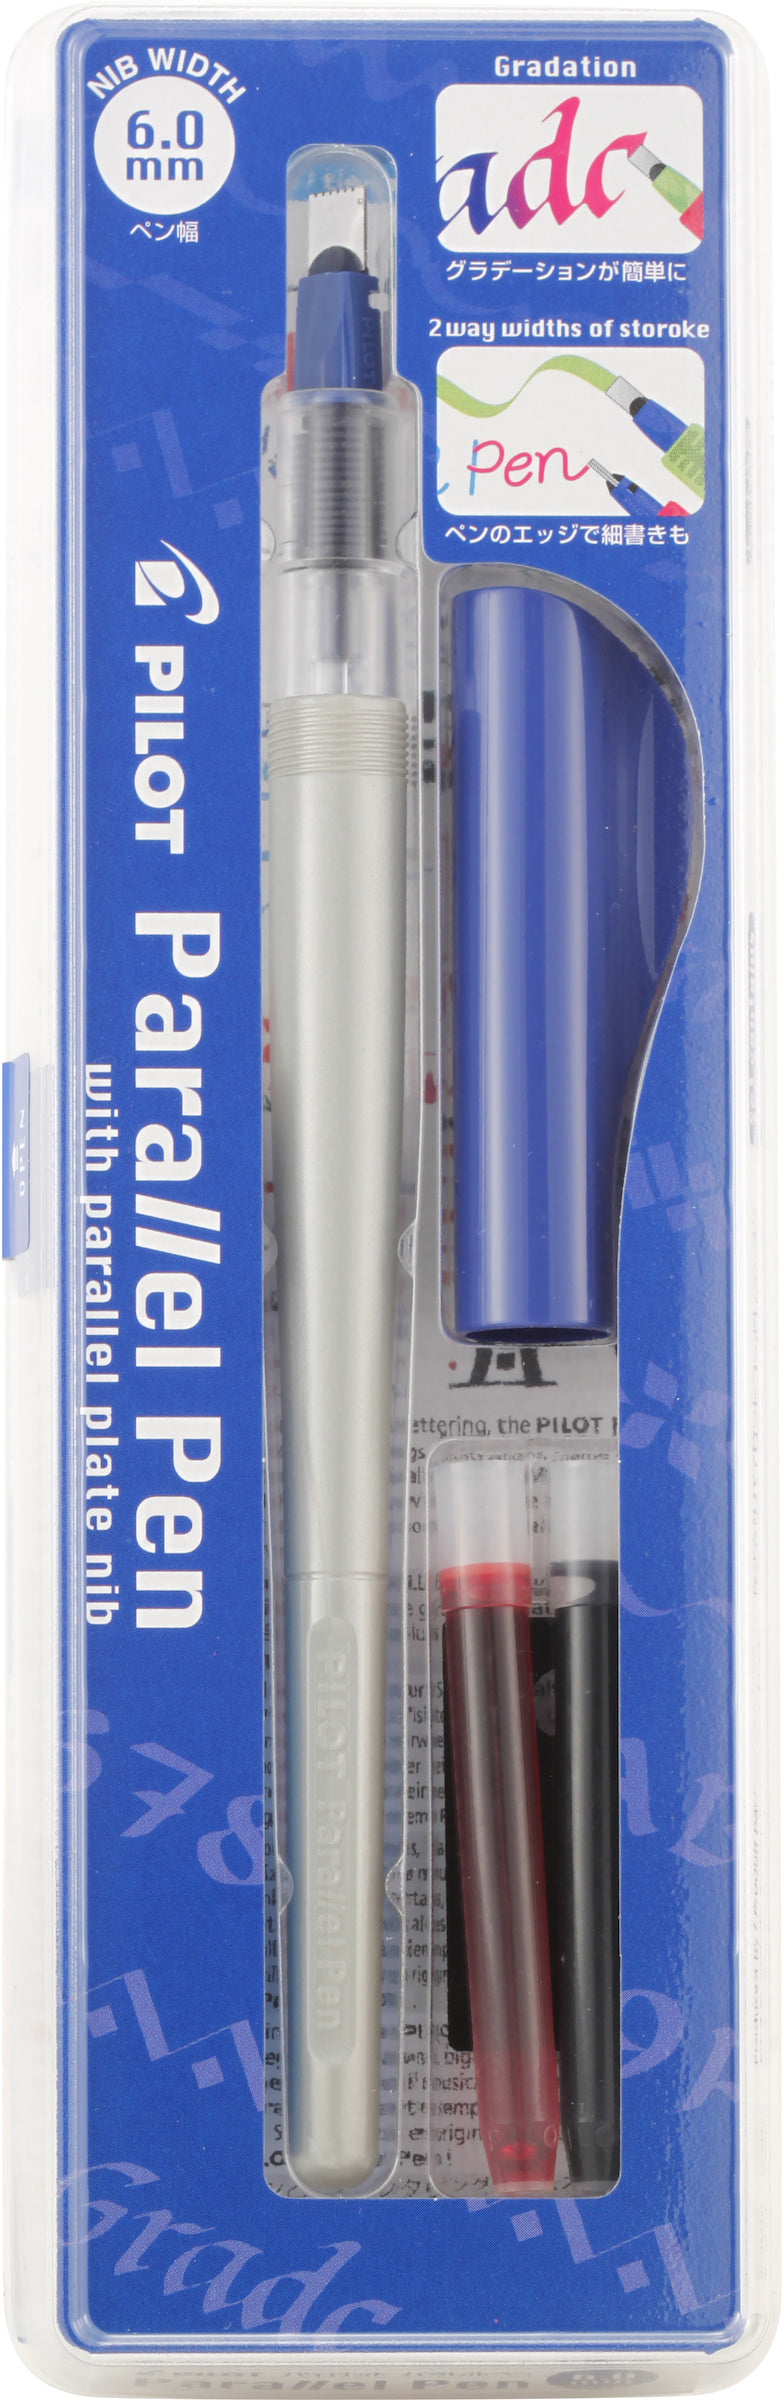 Pilot Parallel Calligraphy Pen 2.4mm